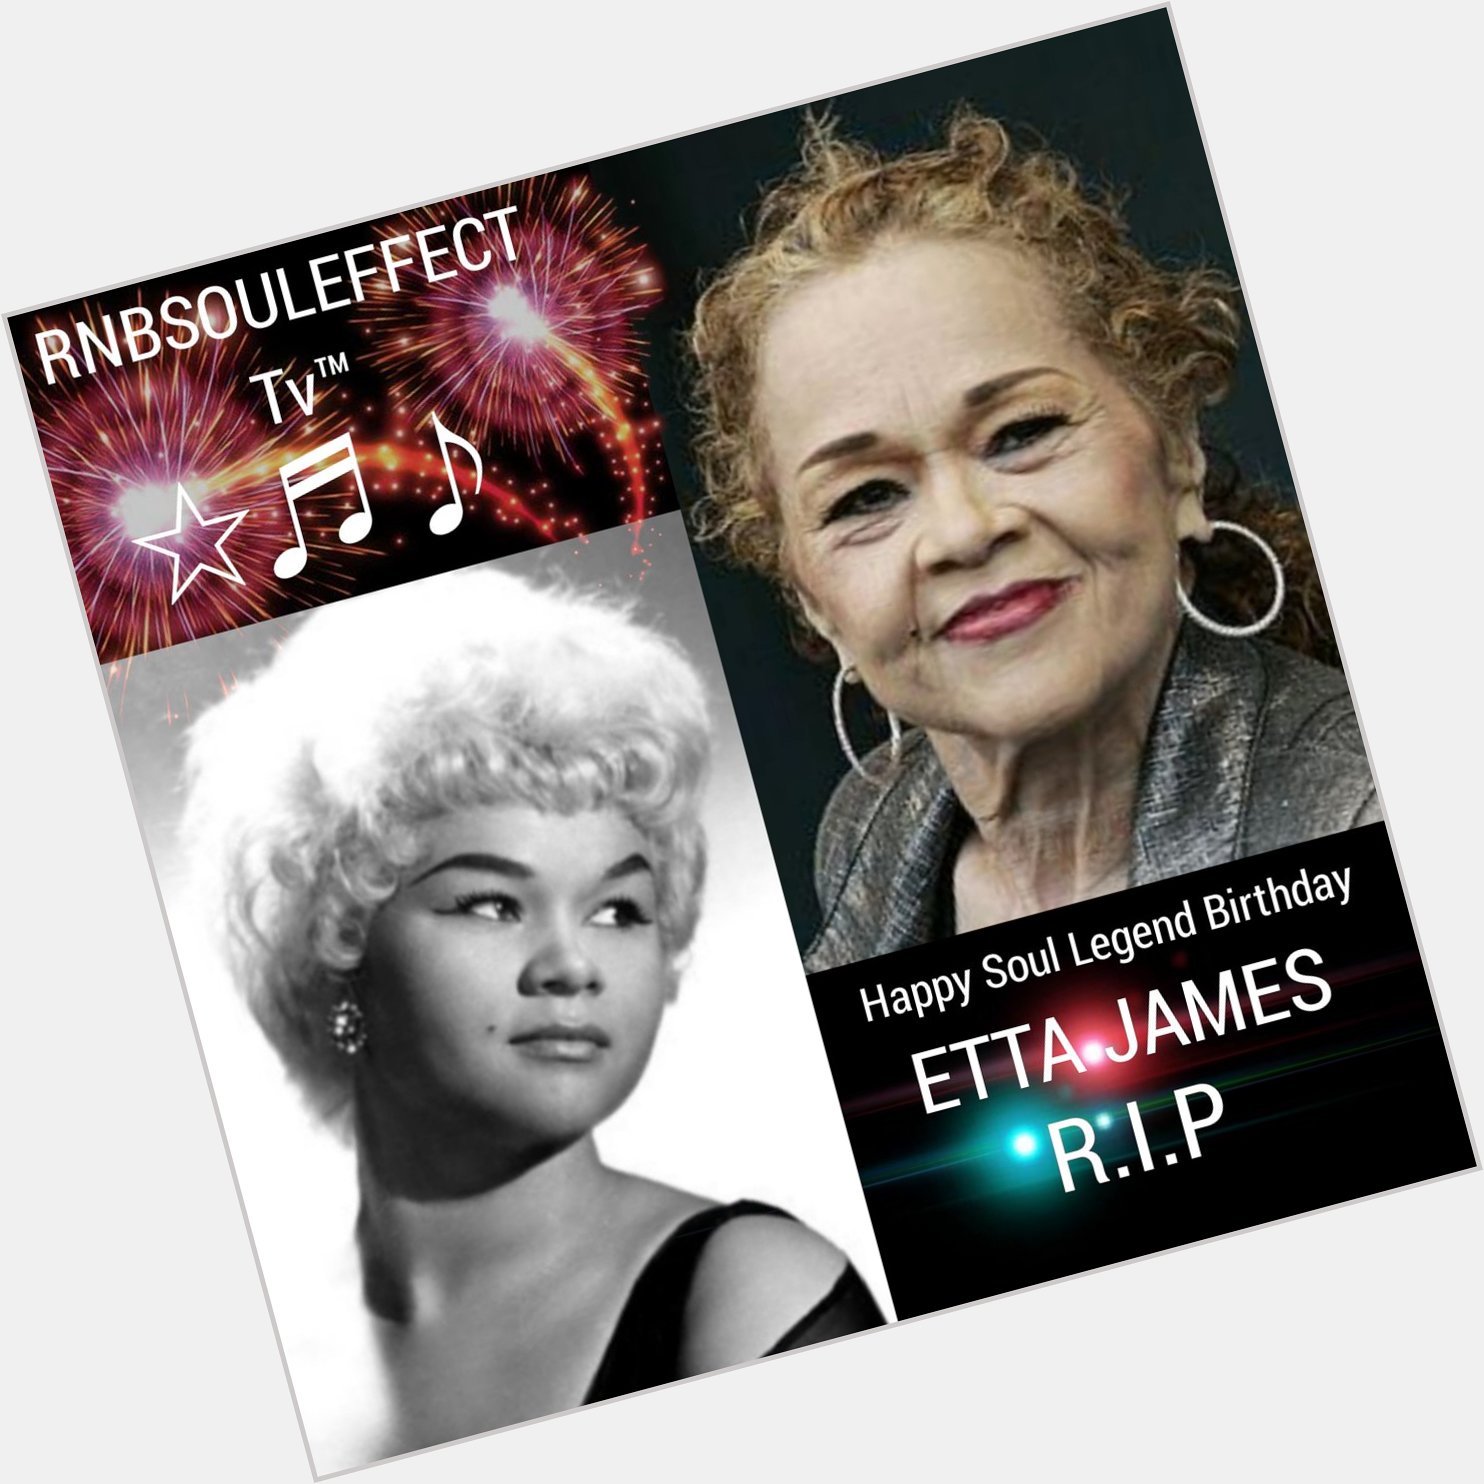 Happy Soul Legend Birthday Etta James    